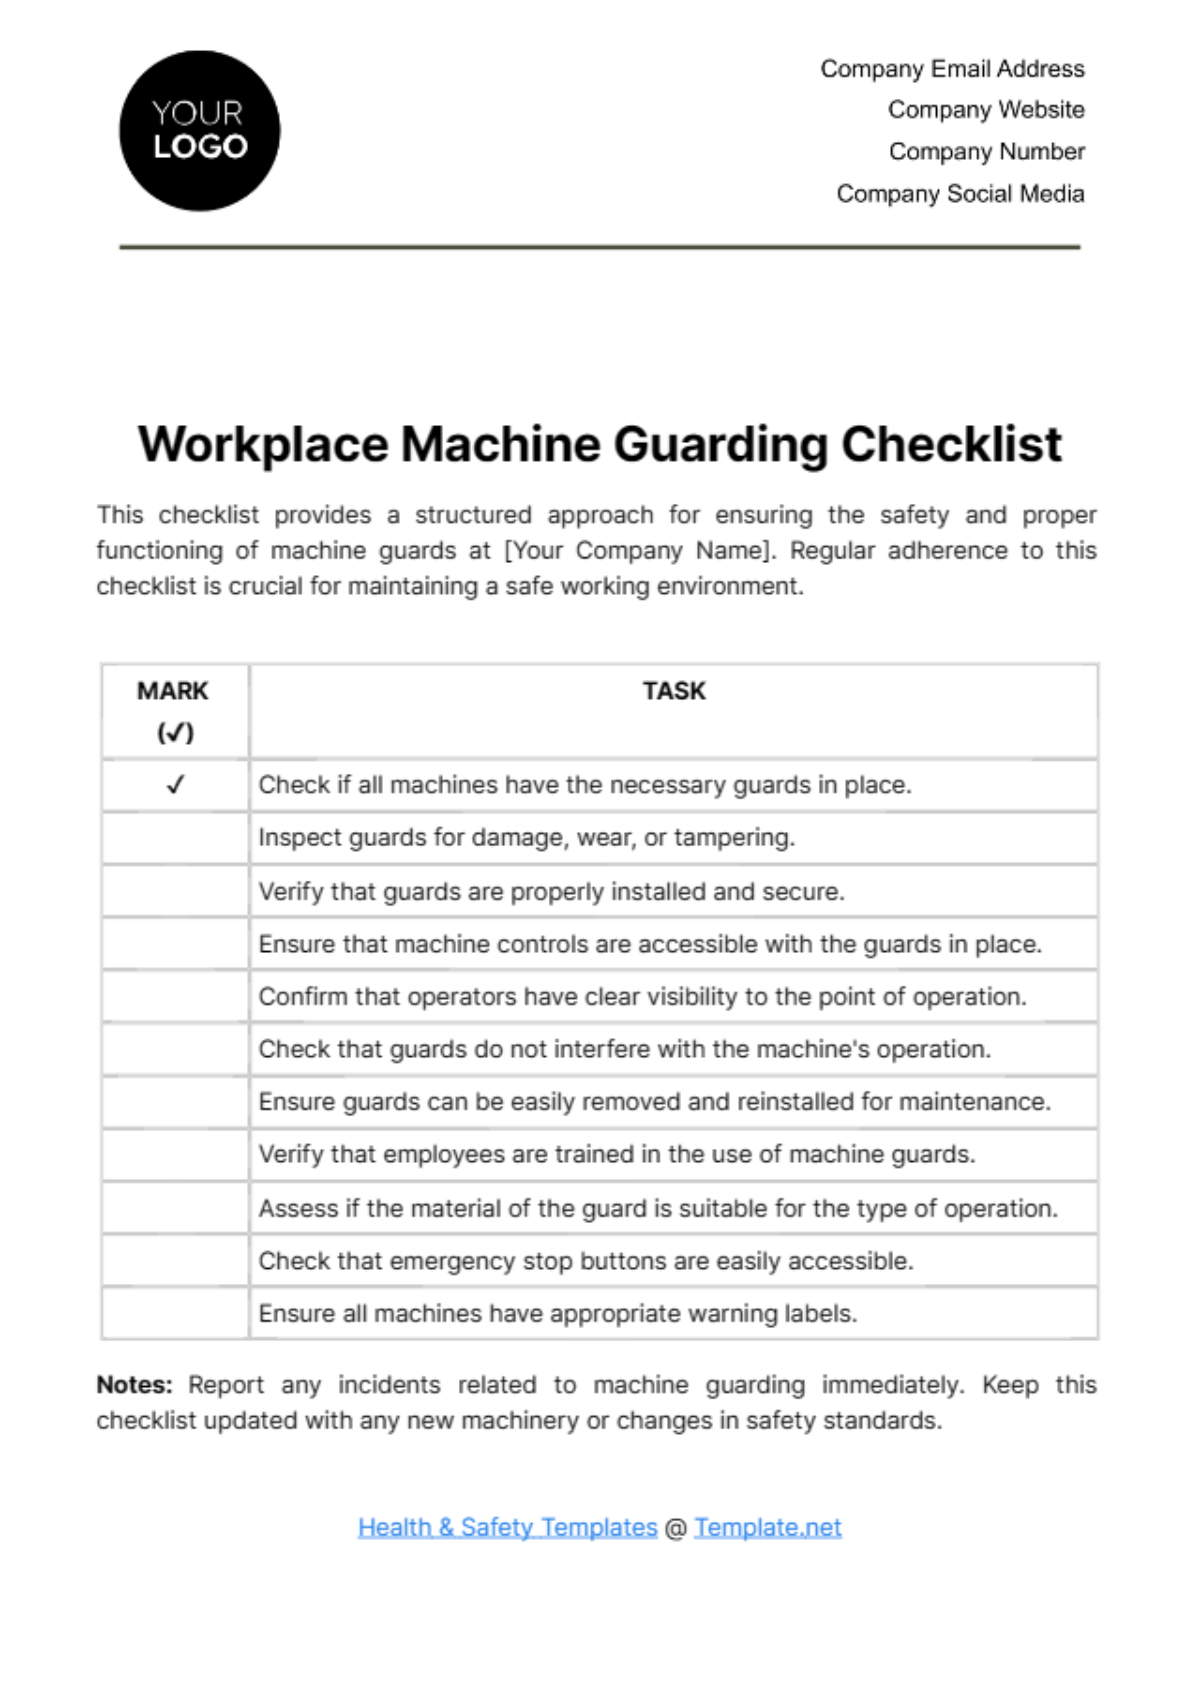 Free Workplace Machine Guarding Checklist Template